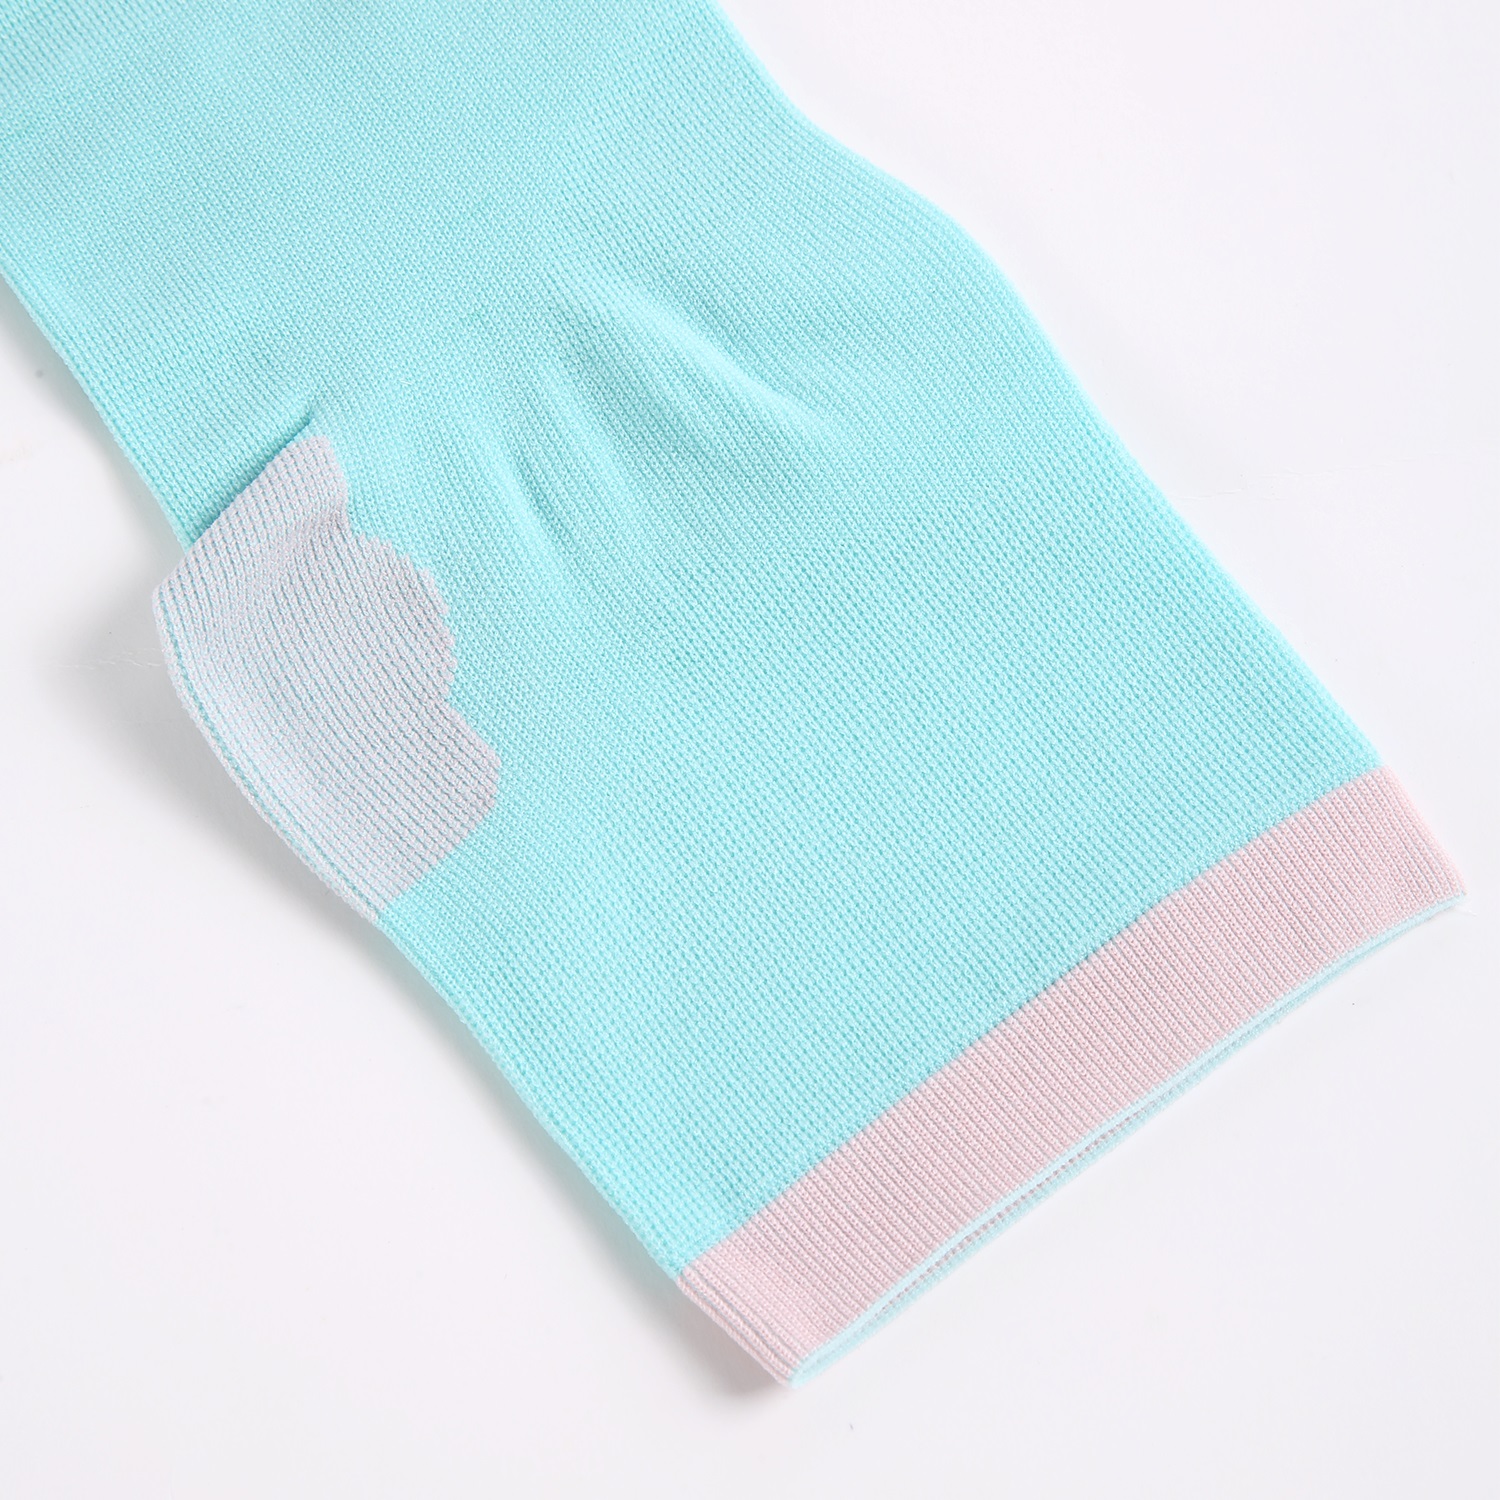 Colorful Nylon 20-30 Mmhg Compression Comfortable Breathable Sleep Socks Open Toe Nylon Sleeping Socks Elastic Leggings